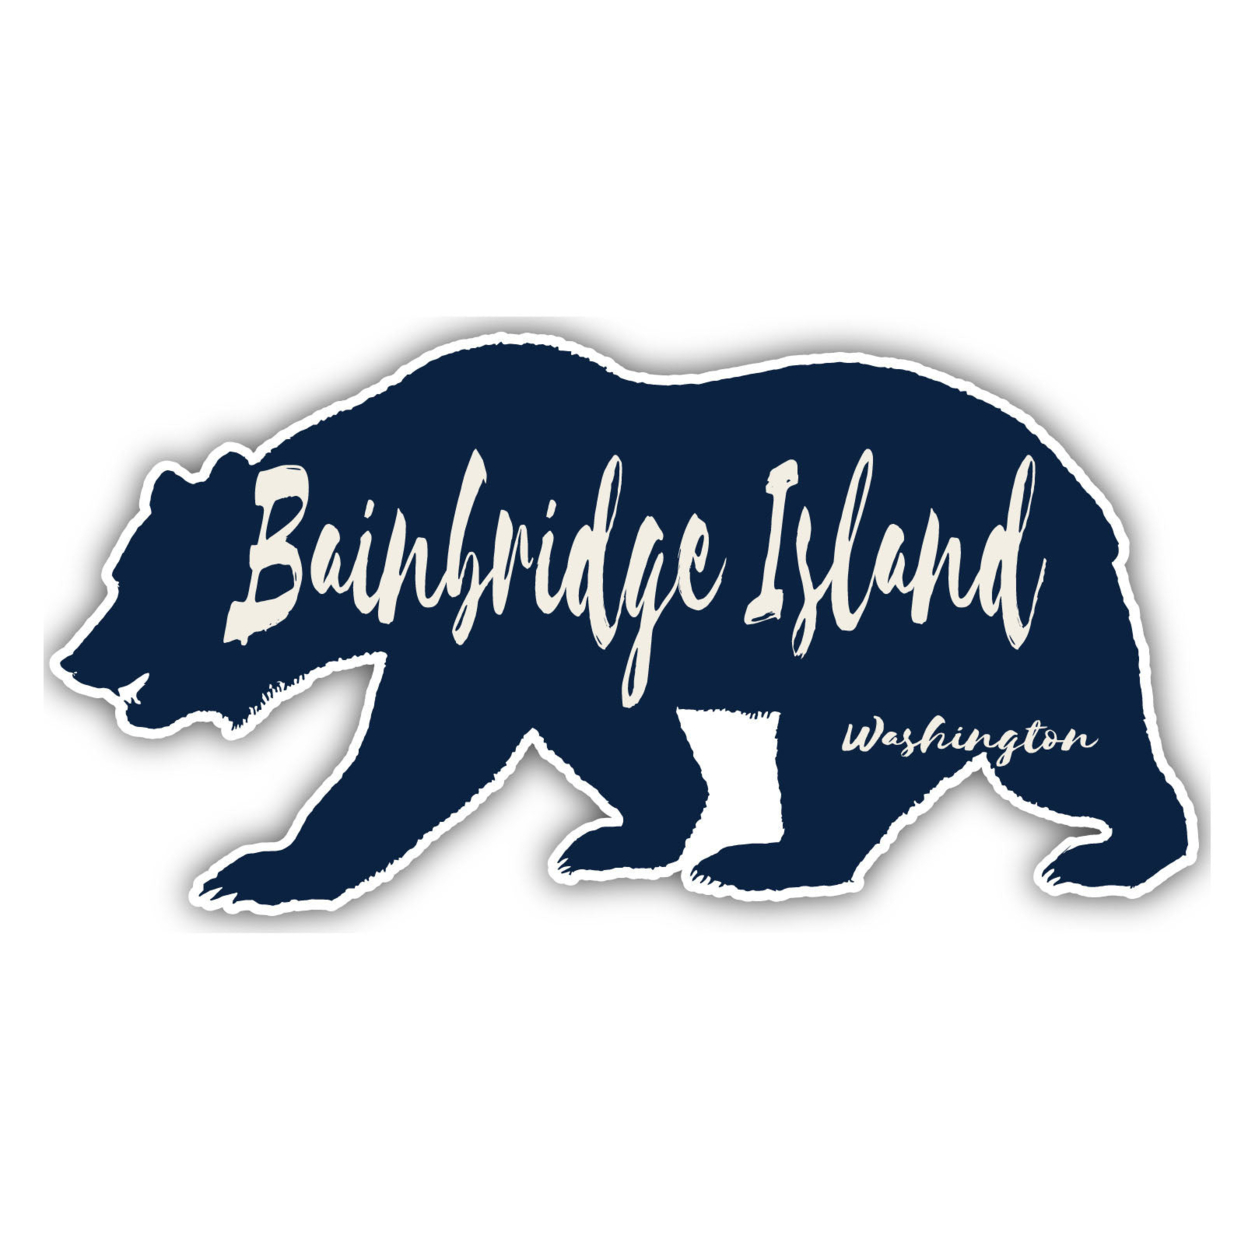 Bainbridge Island Washington Souvenir Decorative Stickers (Choose Theme And Size) - Single Unit, 4-Inch, Adventures Awaits